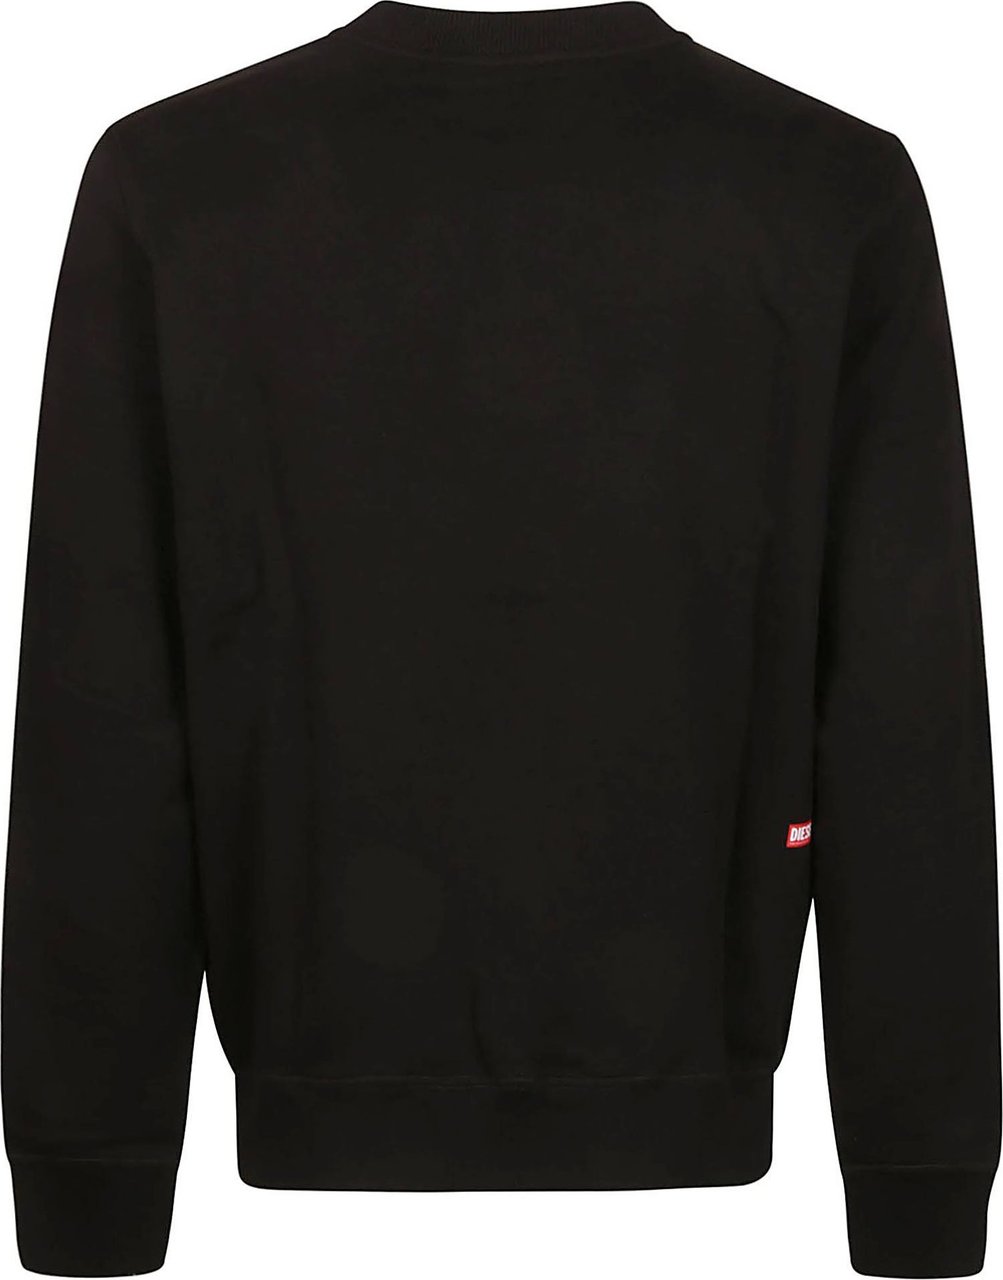 Diesel S-ginn N1 Sweatshirt Black Zwart